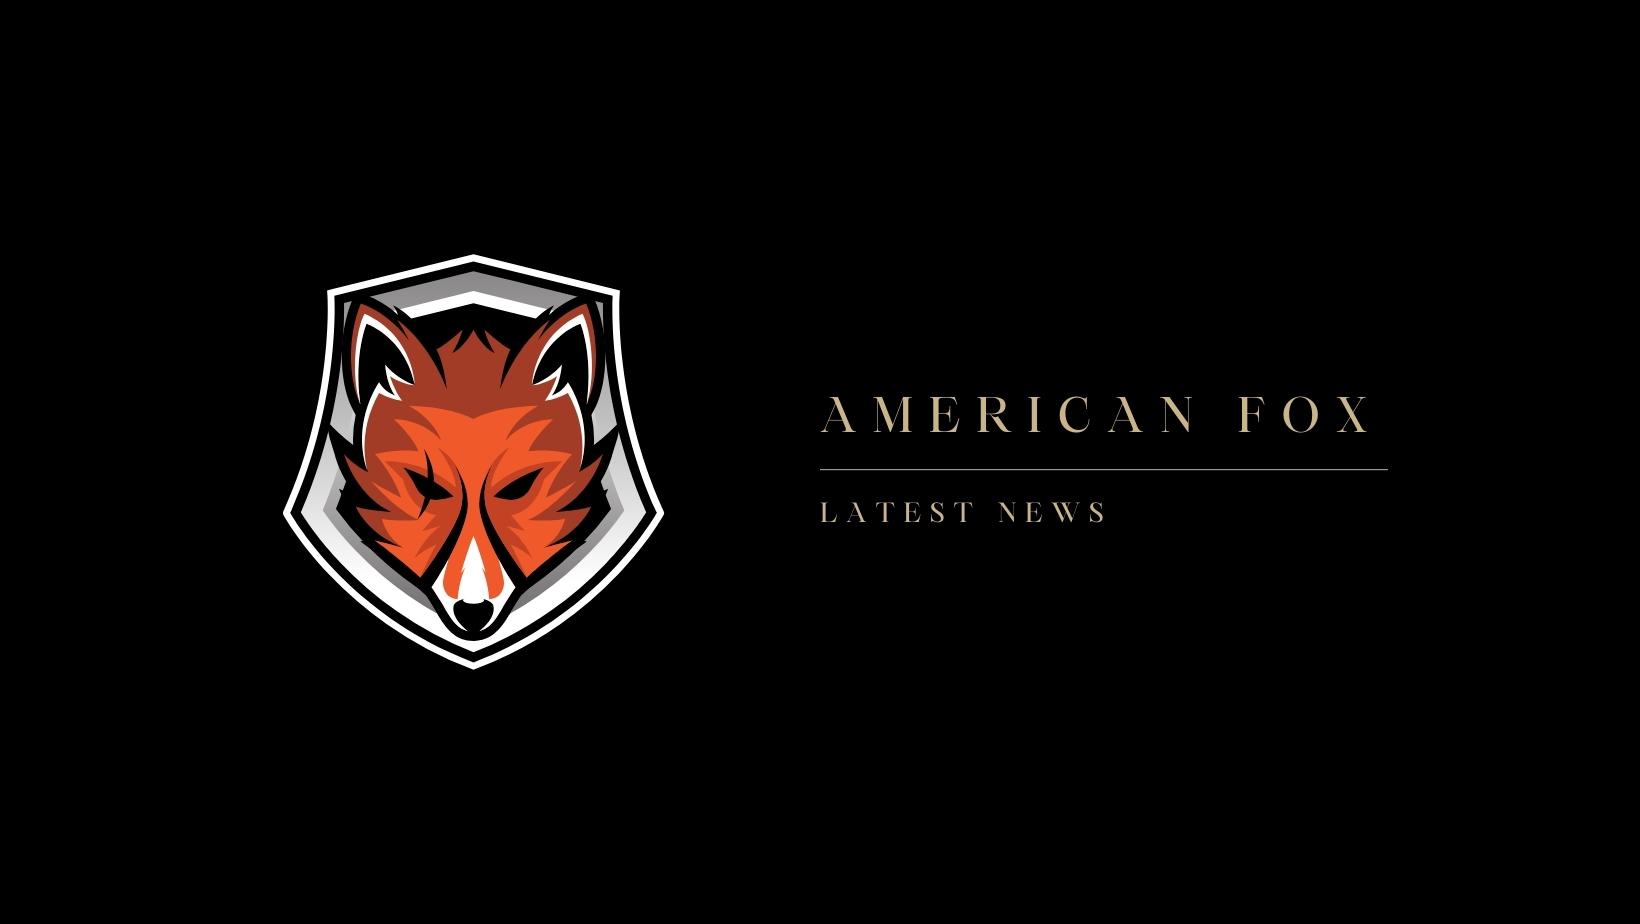 The American Fox